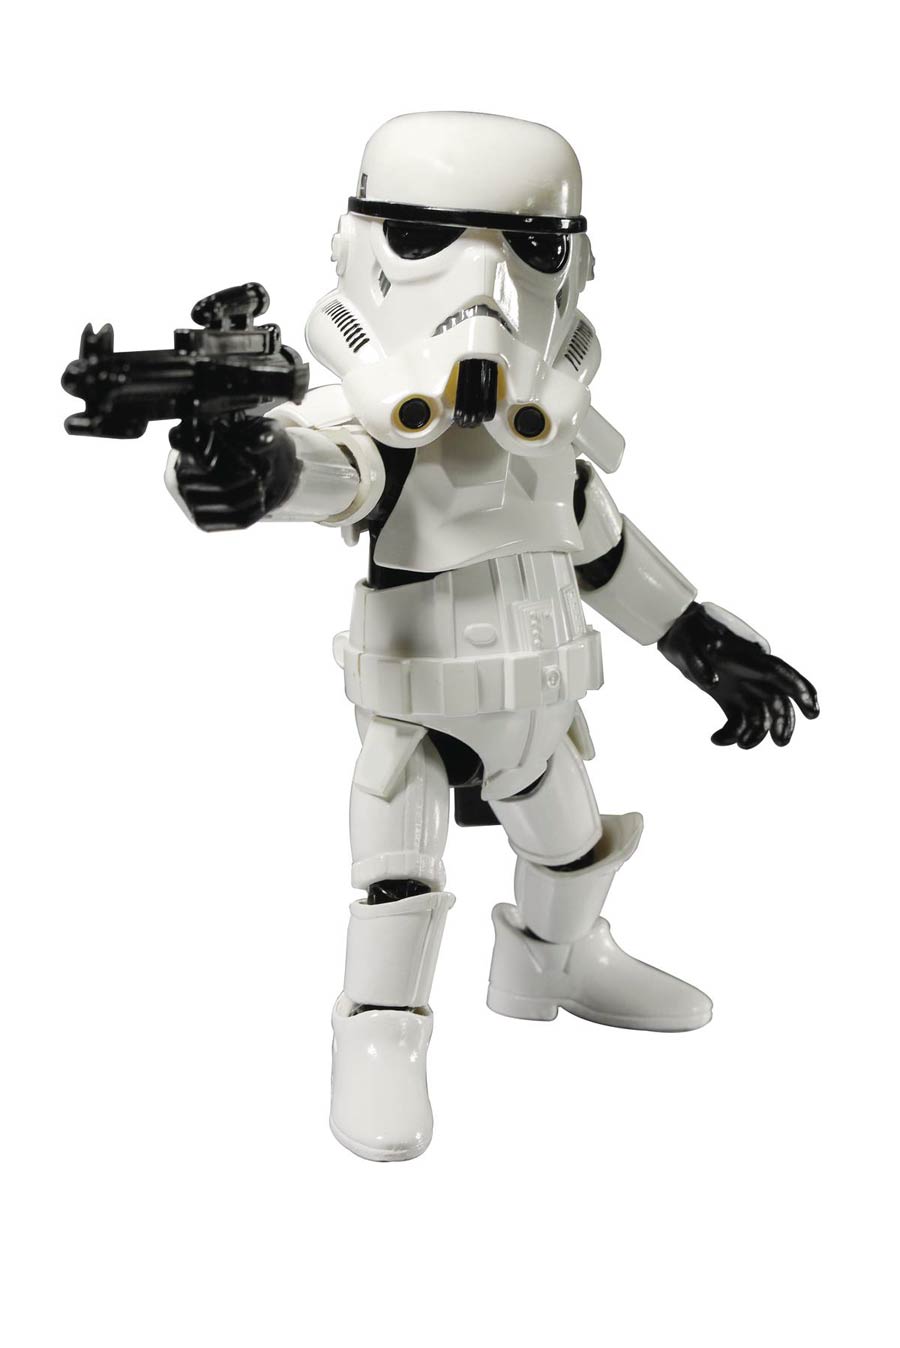 Star Wars HMF-005 Stormtrooper Action Figure